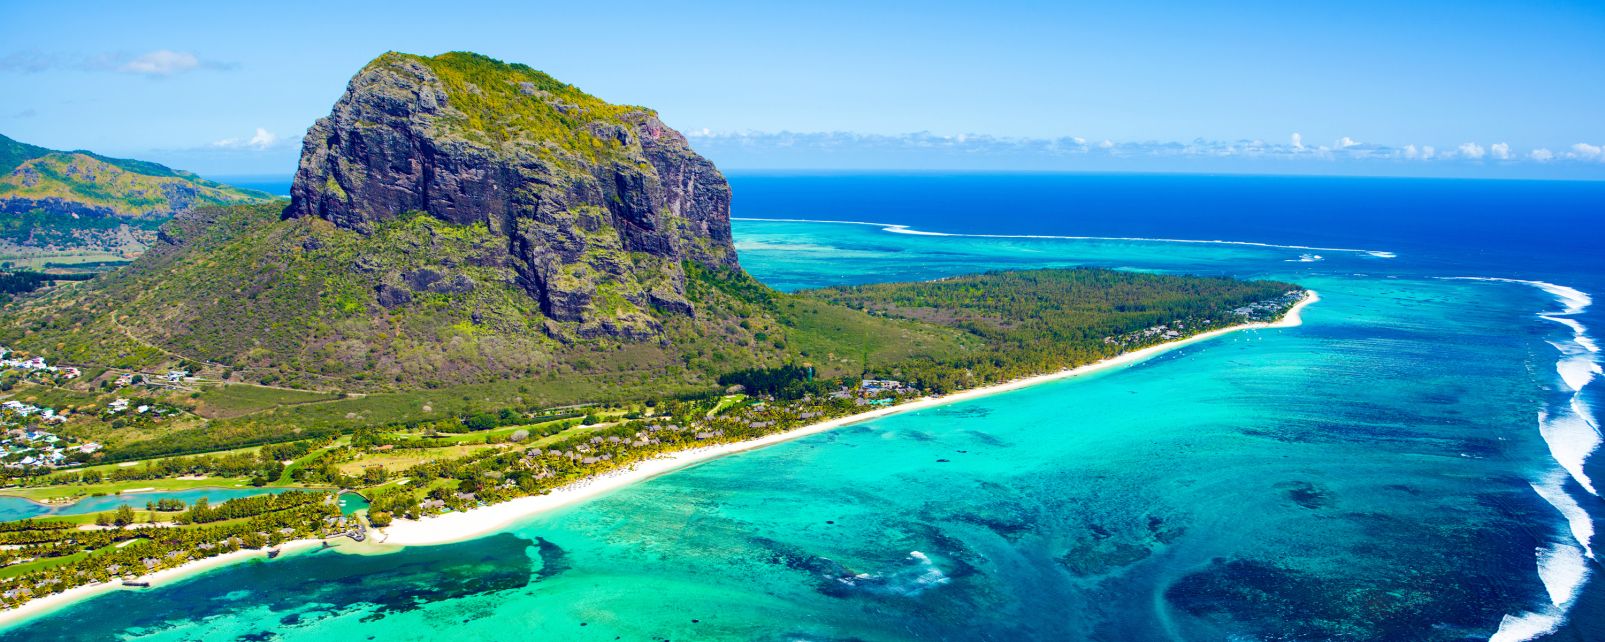 Travel to Le Morne, Mauritius - Le Morne Travel Guide - Easyvoyage